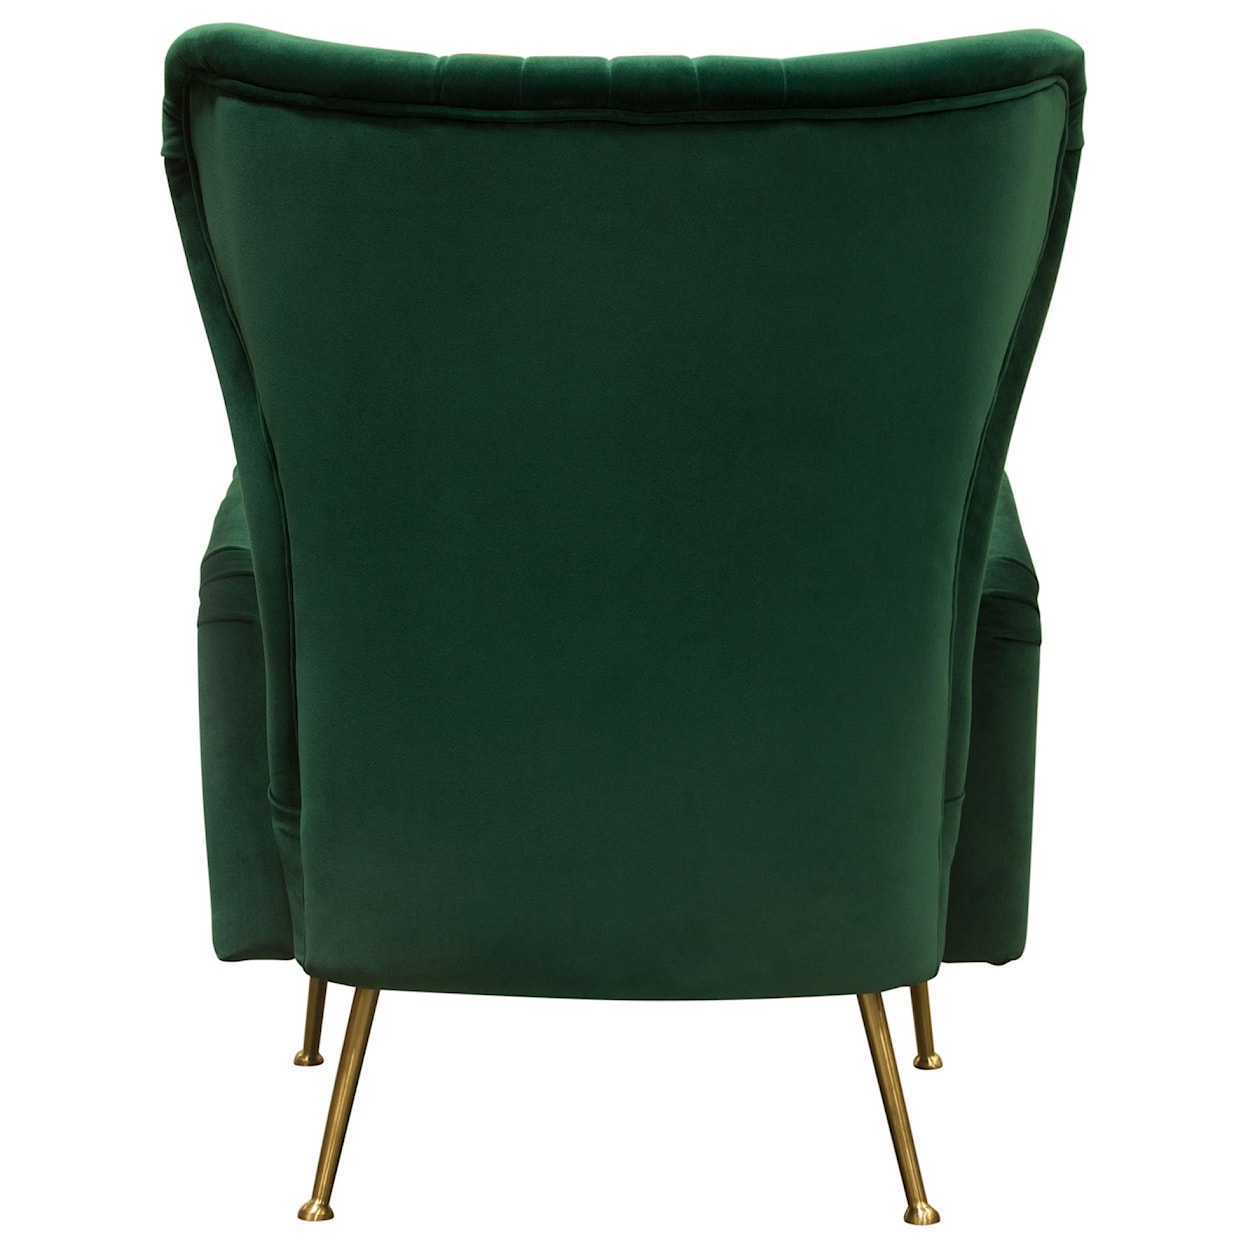 Diamond Sofa Furniture Ava Upholstered Chair